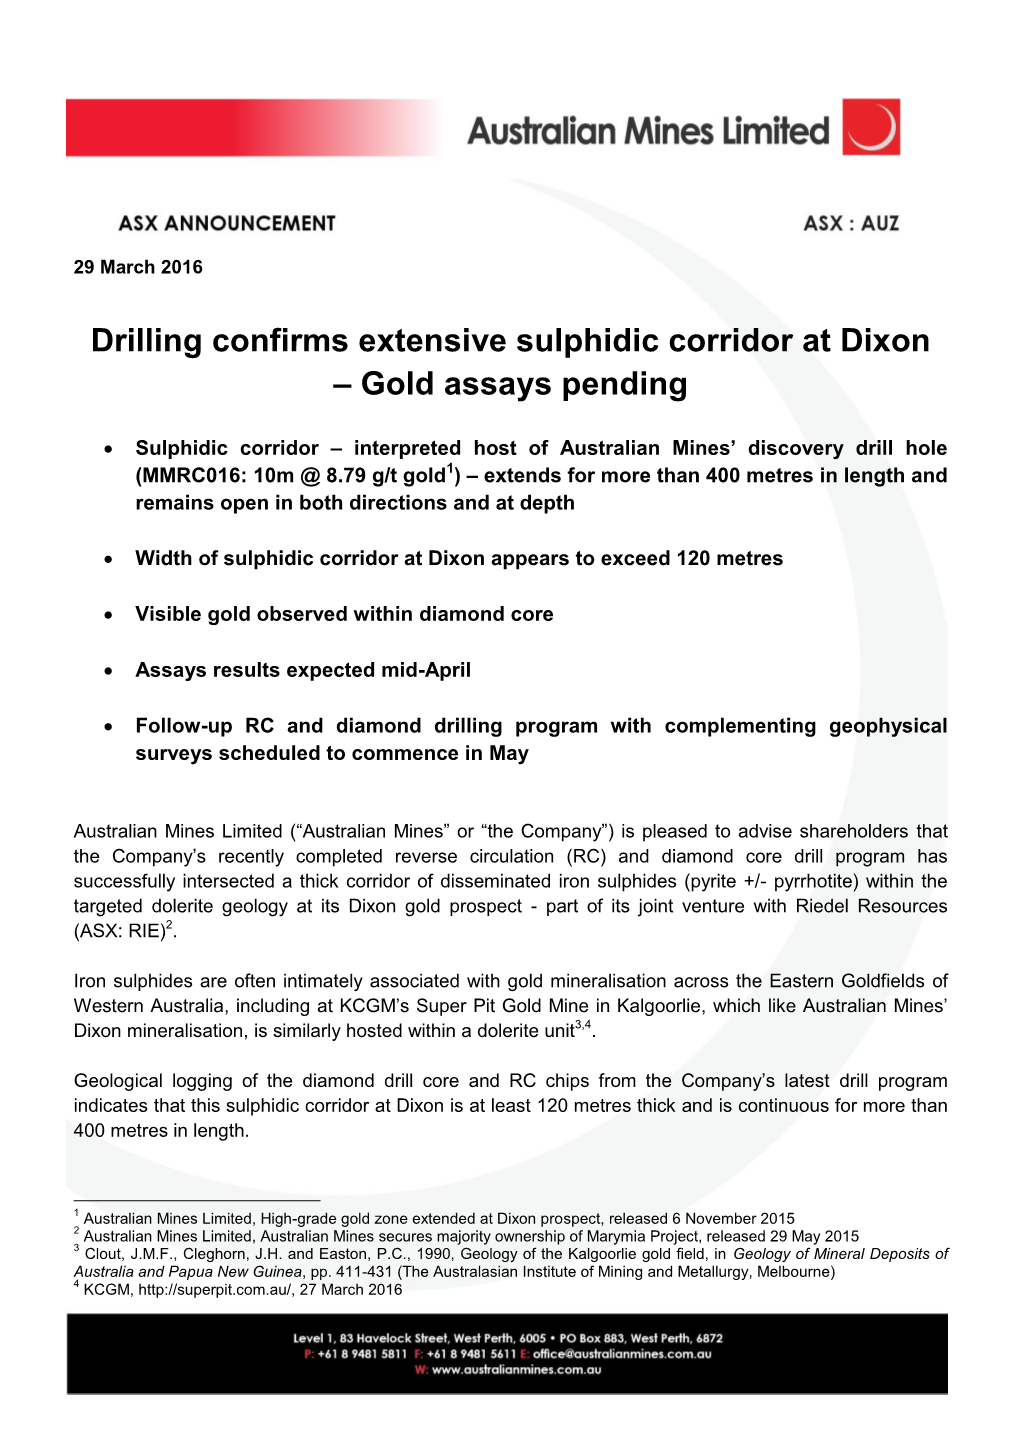 Drilling Confirms Extensive Sulphidic Corridor at Dixon – Gold Assays Pending